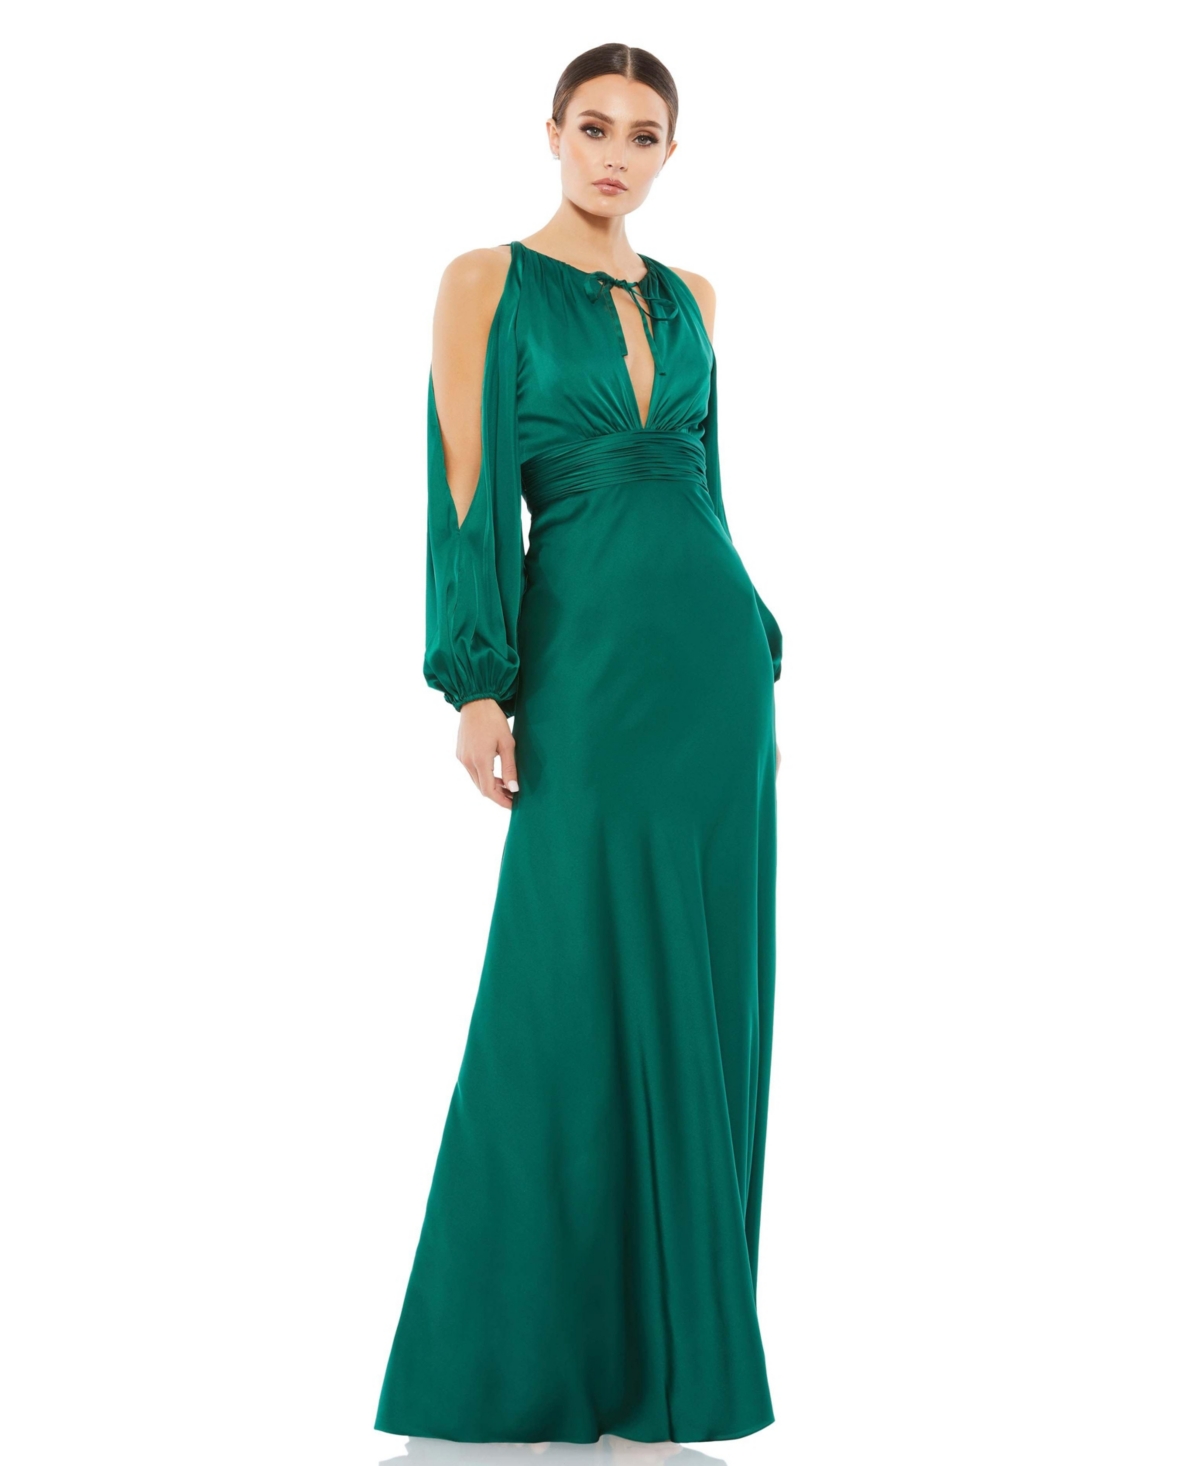 70s Prom, Formal, Evening, Party Dresses Womens Ieena Tied Keyhole Cold Shoulder Bishop Sleeve Gown - Emerald $398.00 AT vintagedancer.com